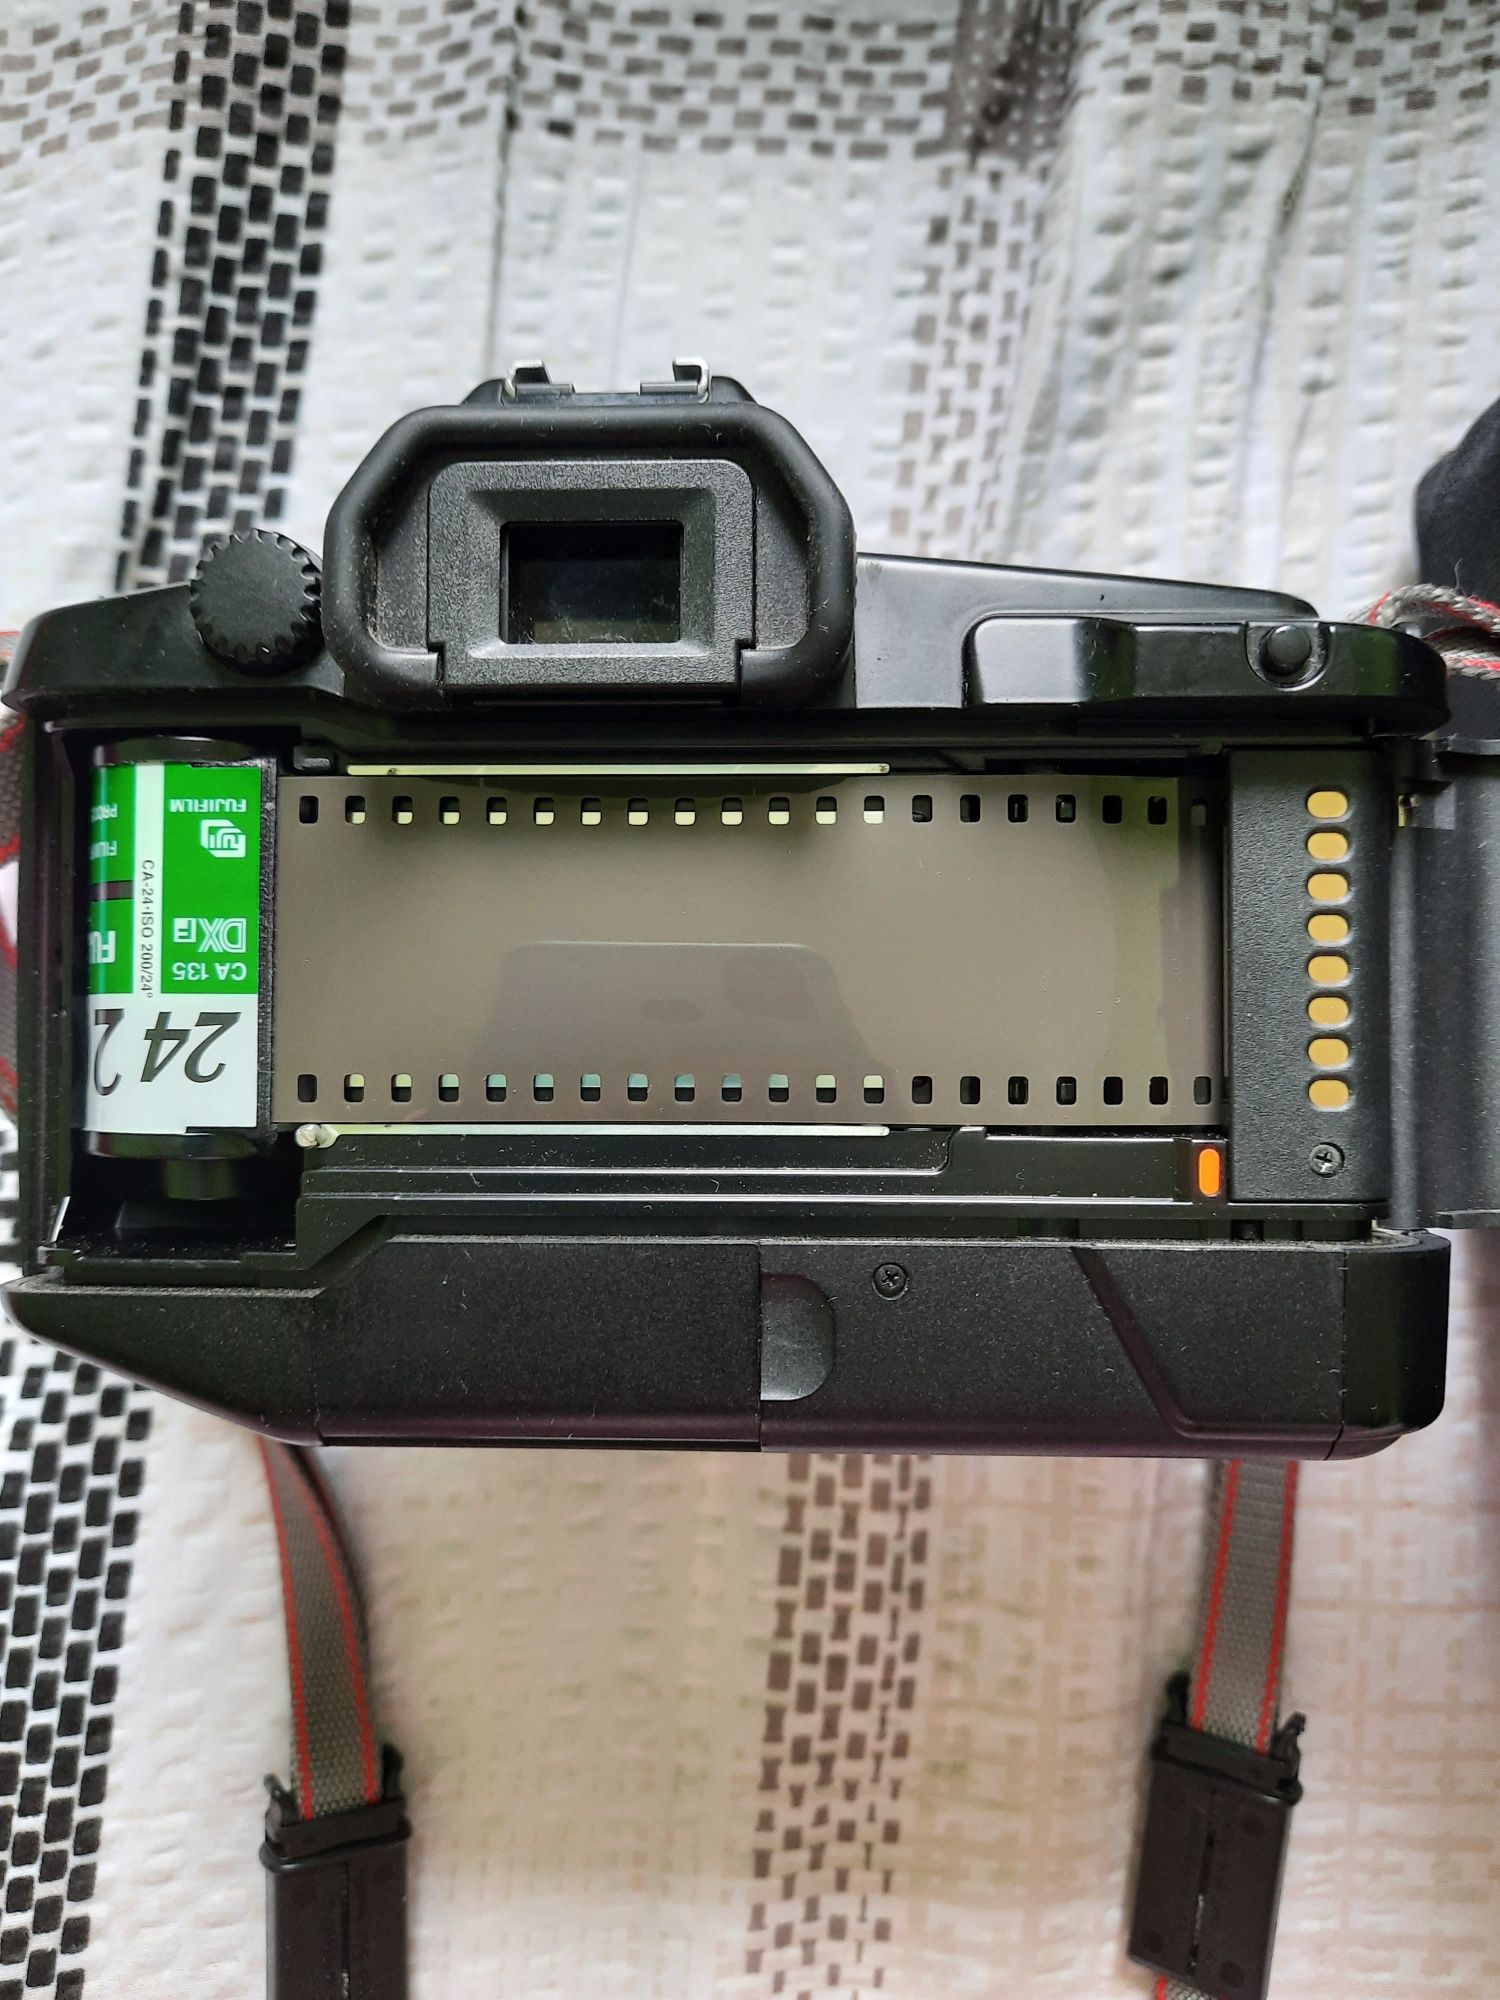 Aparat  fotograficzny Canon